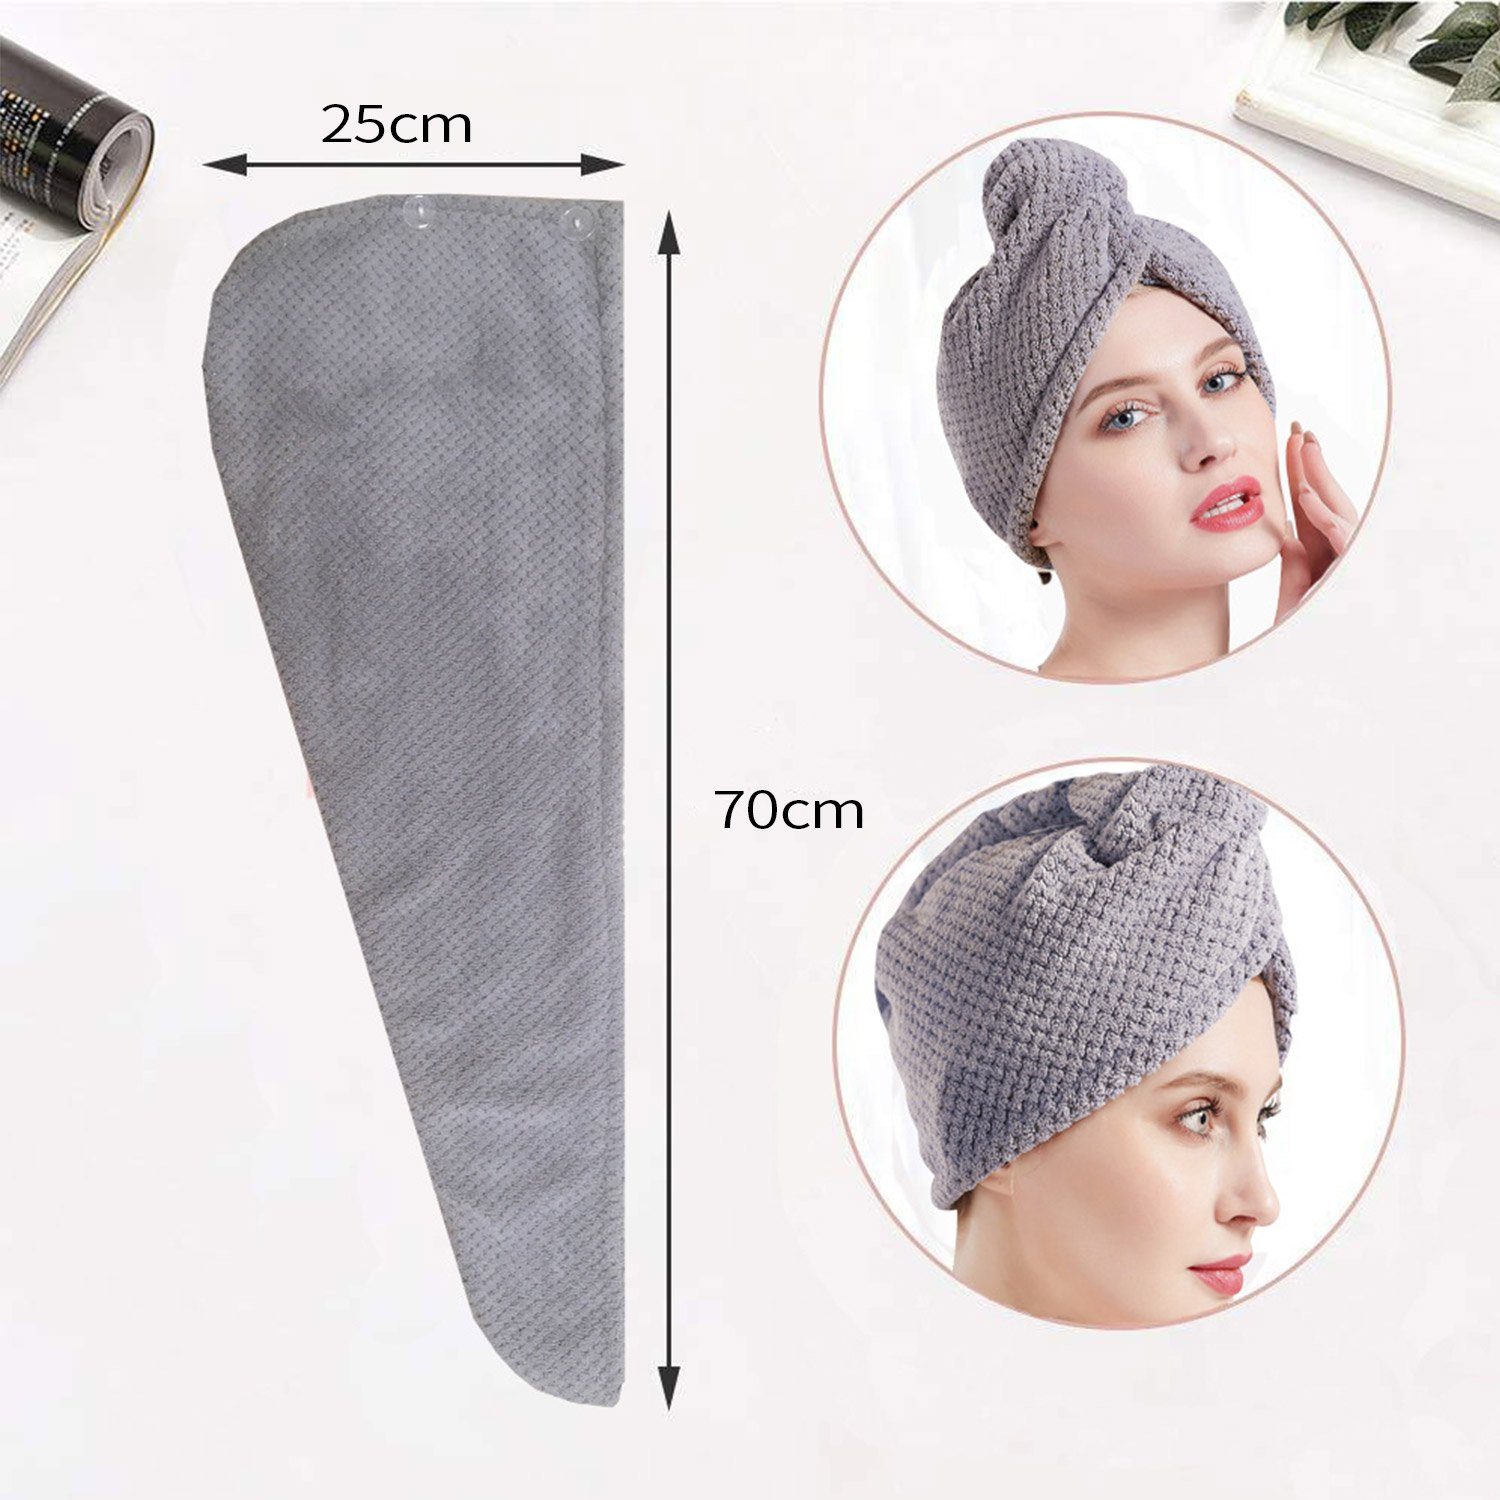 MAGICSHE Turban-Handtuch Haarturban (2-St),Super mit knopf Kaffee Grauer+heller 25*70cm saugfähig